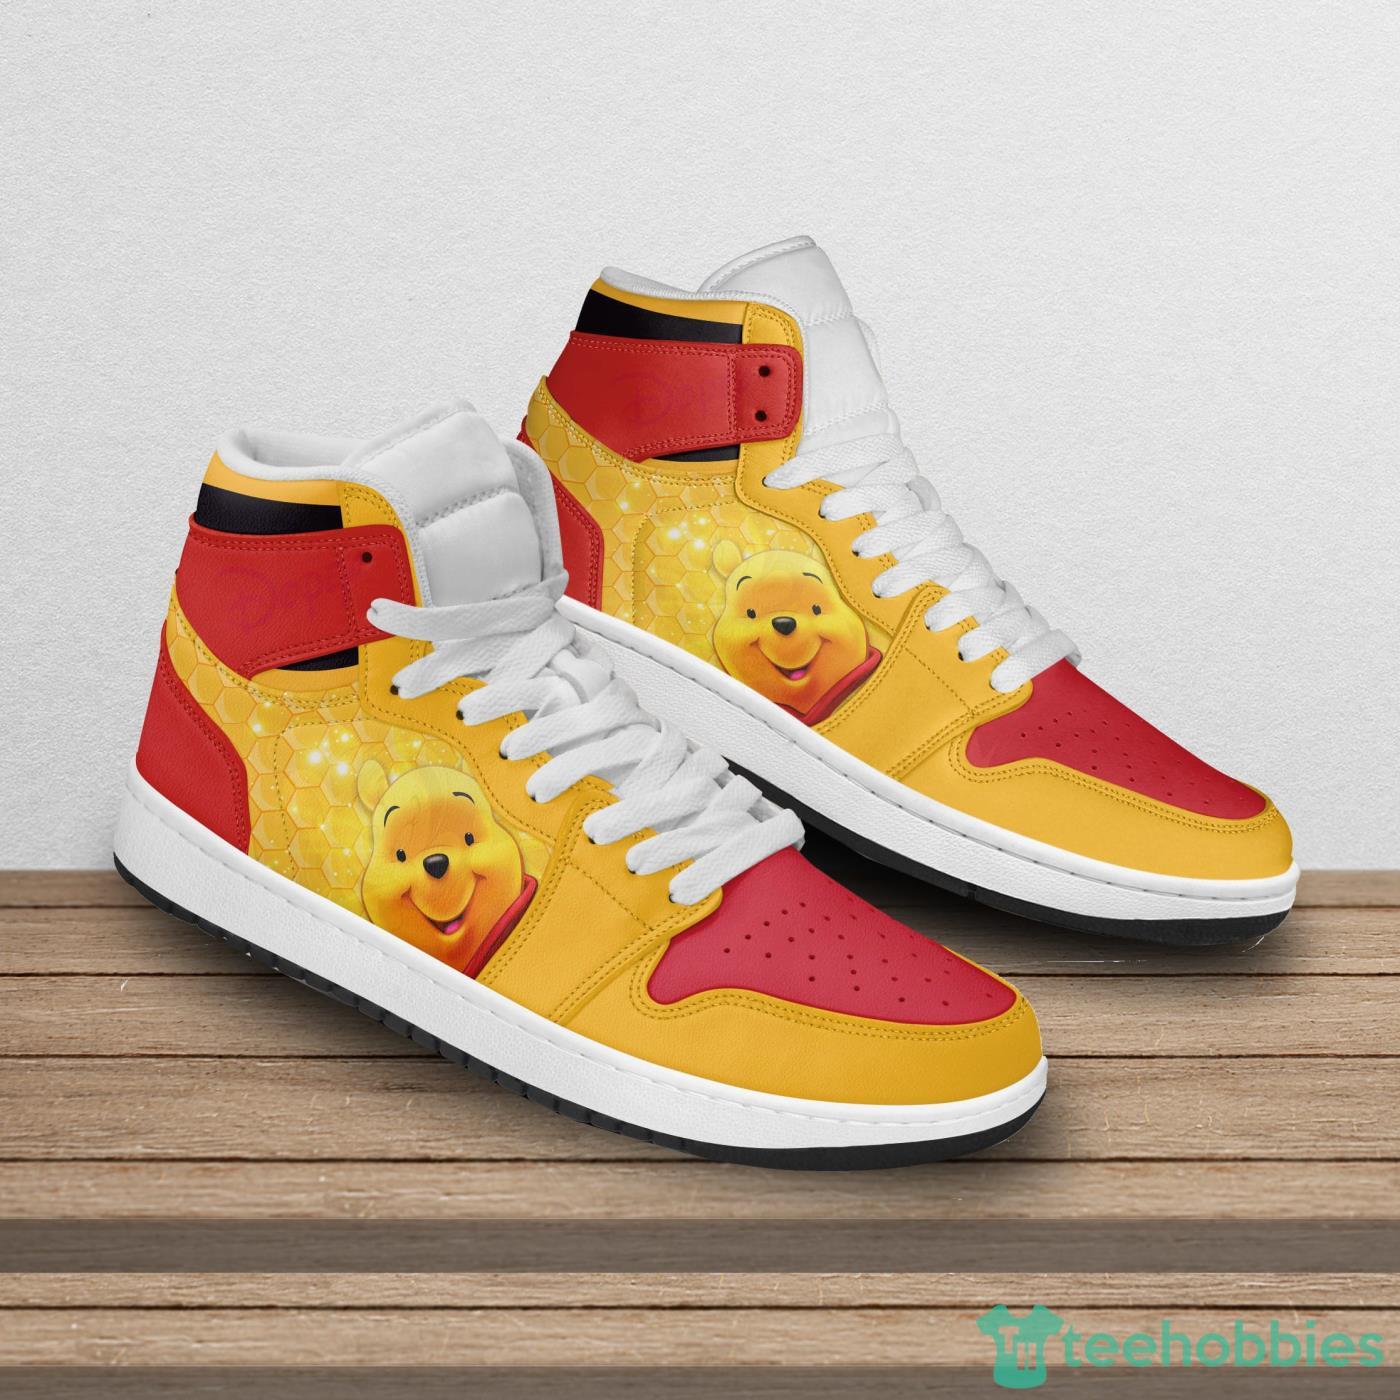 Winnie The Pooh Red Orange Disney Cartoon Sneakers Boots Air Jordan Hightop Shoes Product Photo 1